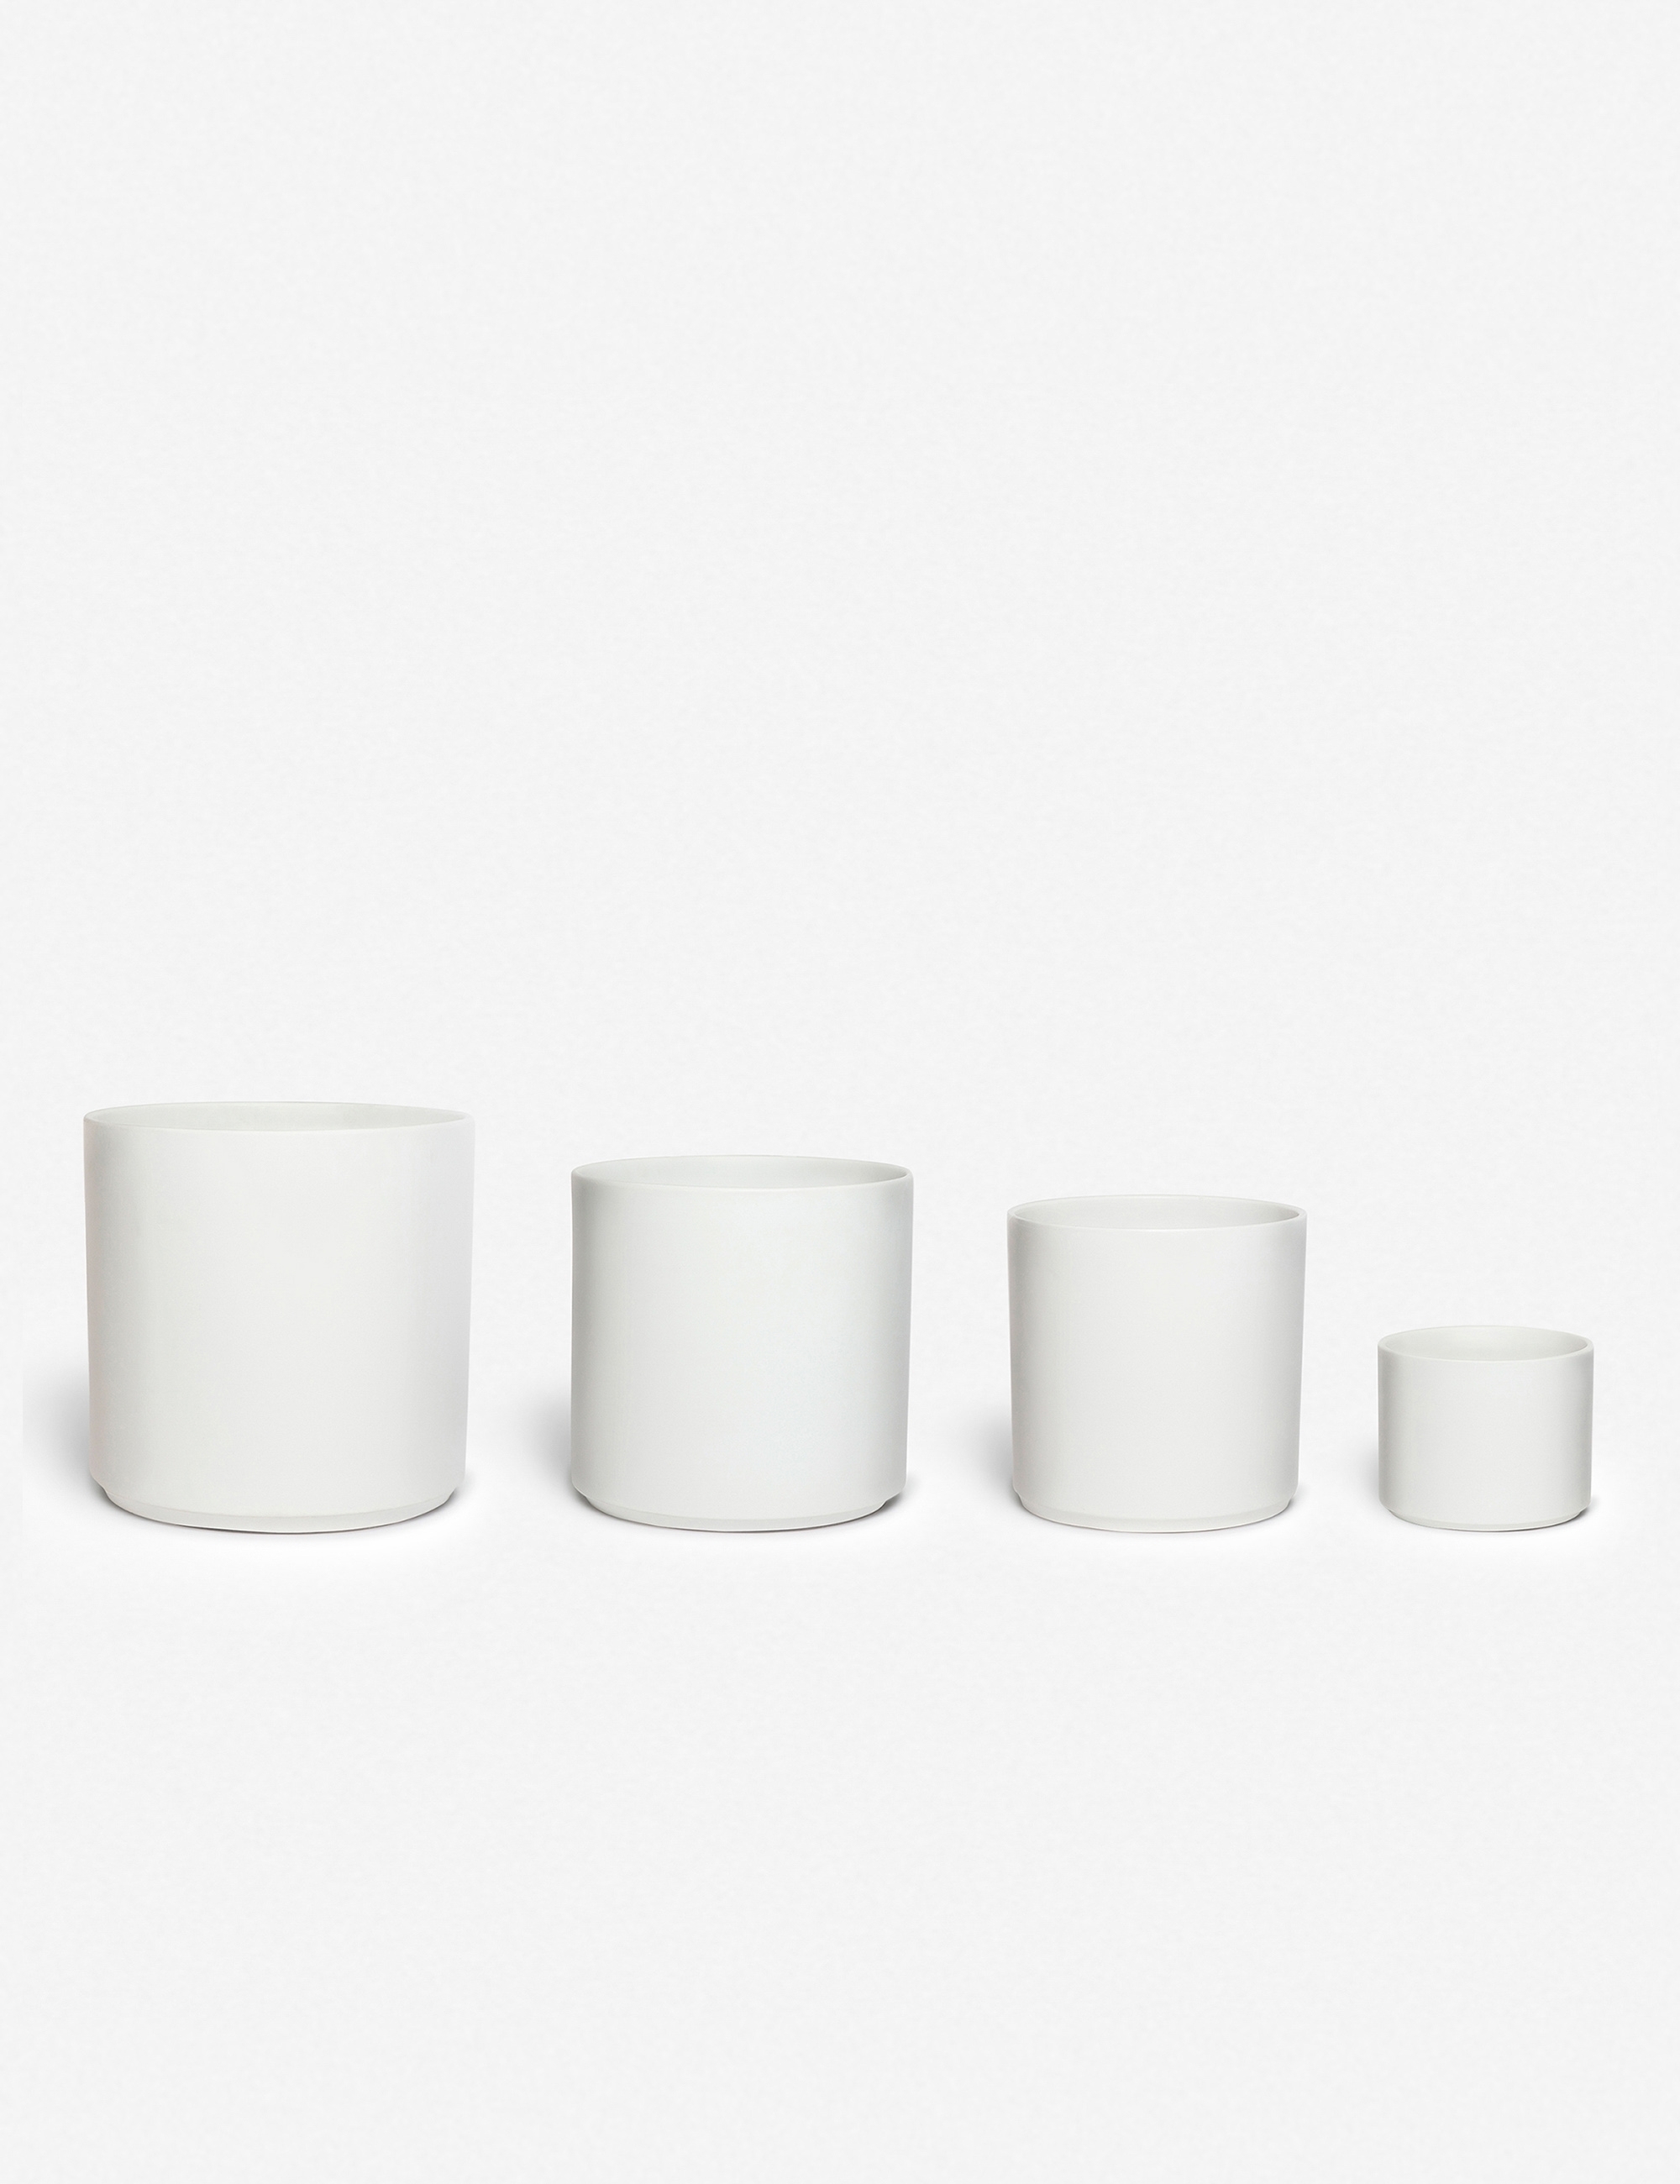 LBE Design Ceramic Planter, White 10"Dia x 9"H - with stand - Image 0